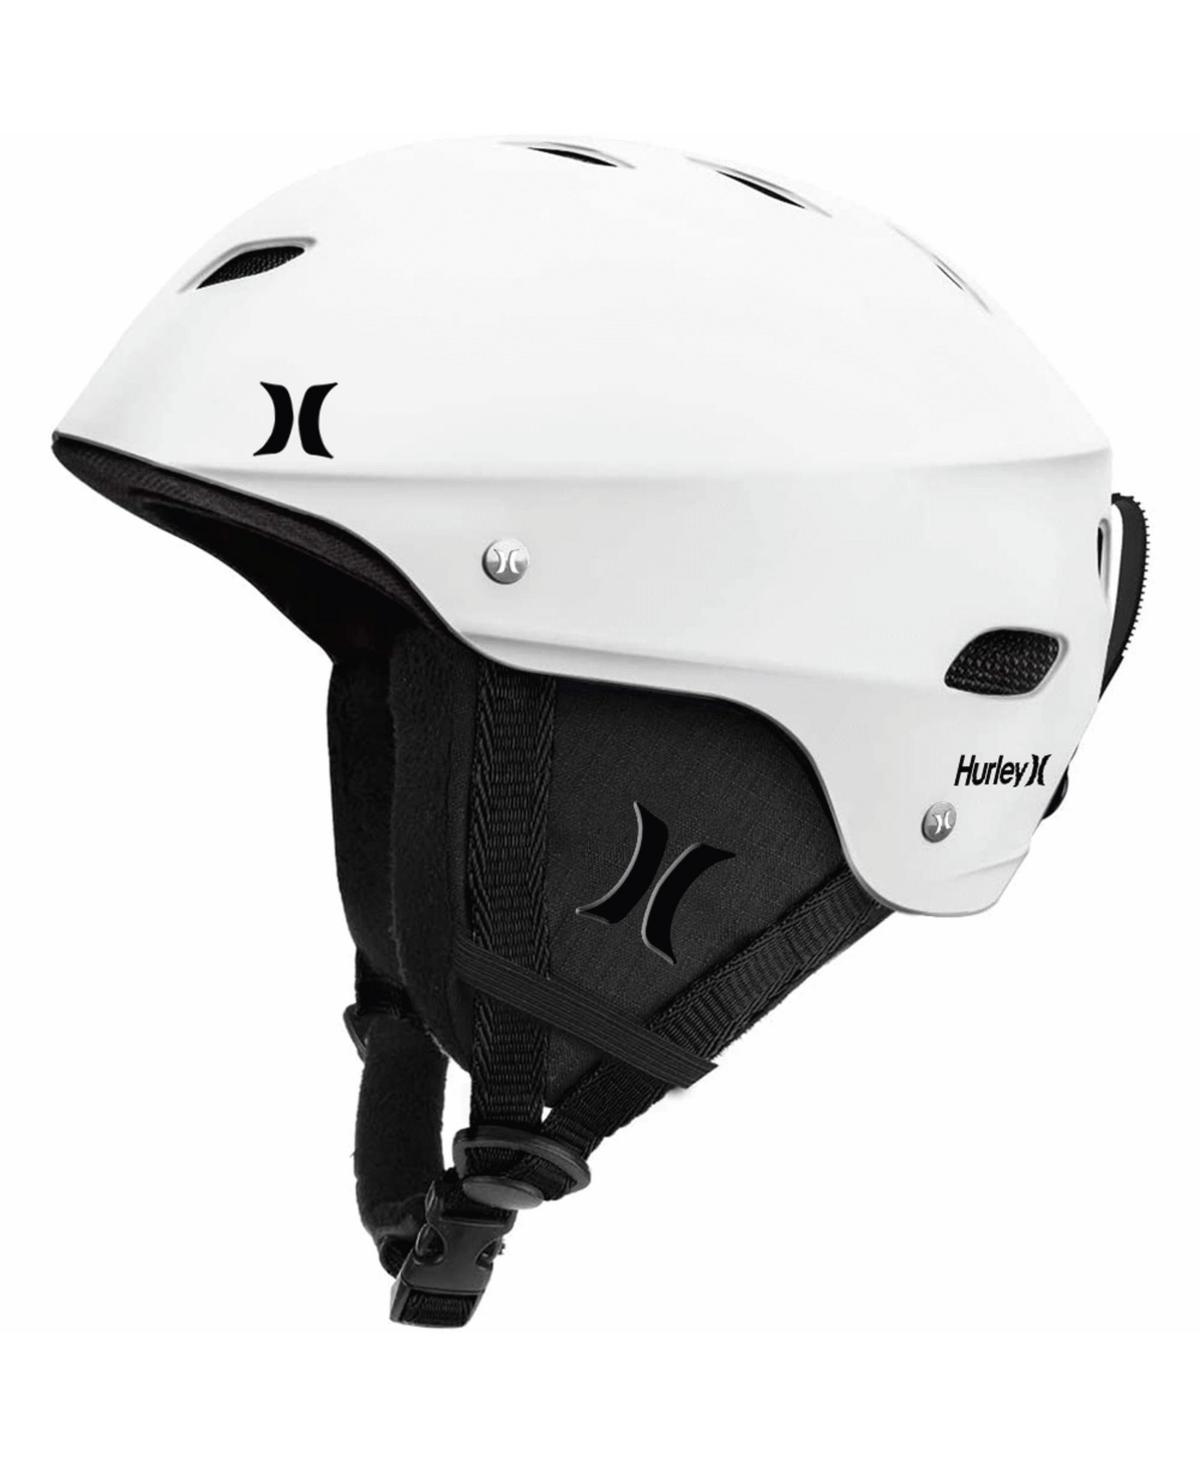 Hurley Youth Snow Helmet, Medium In White